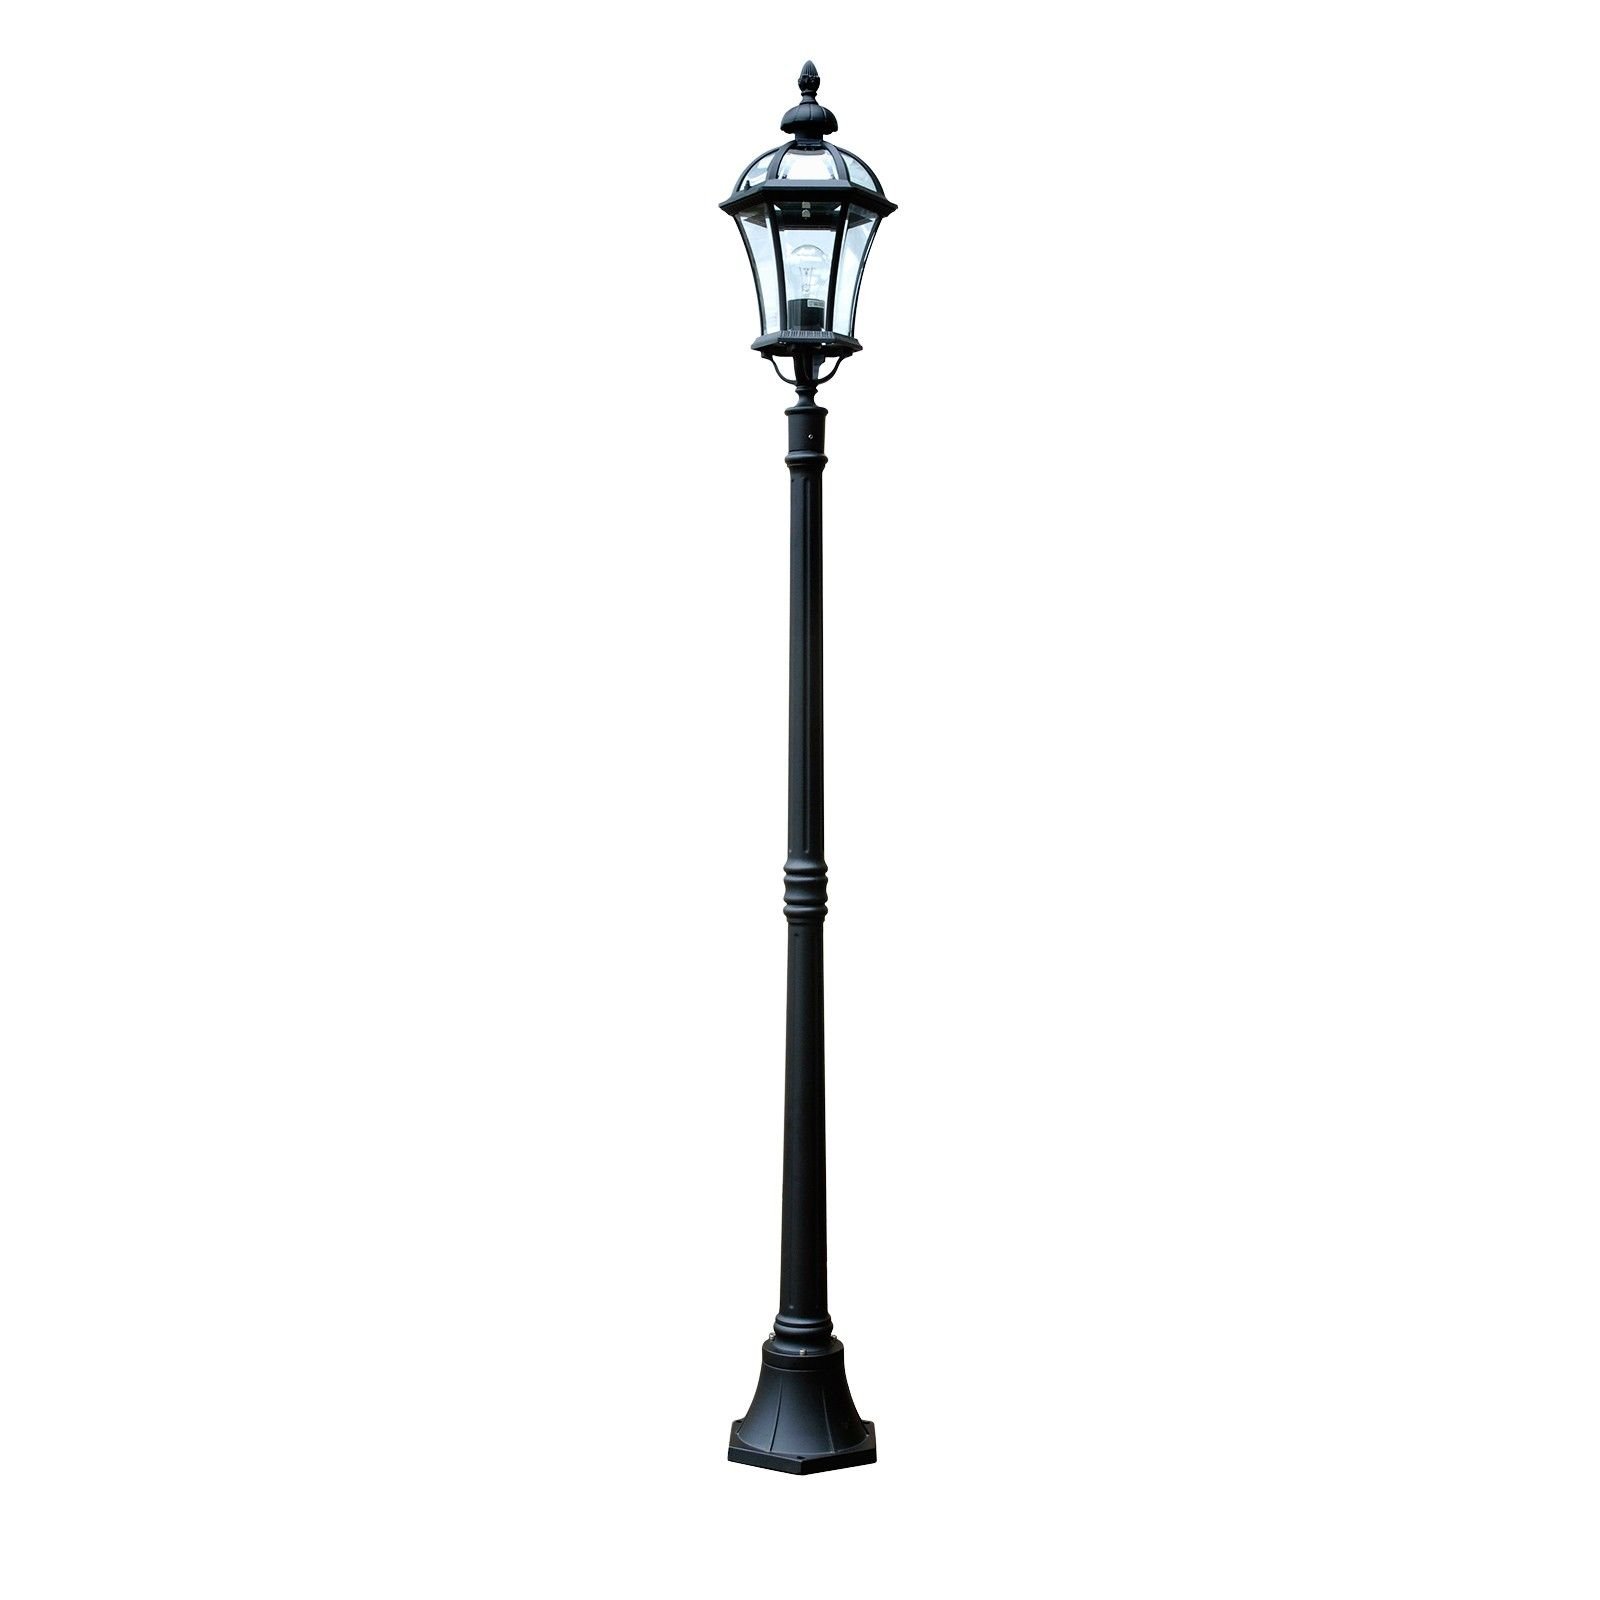 Ledbury lamp post